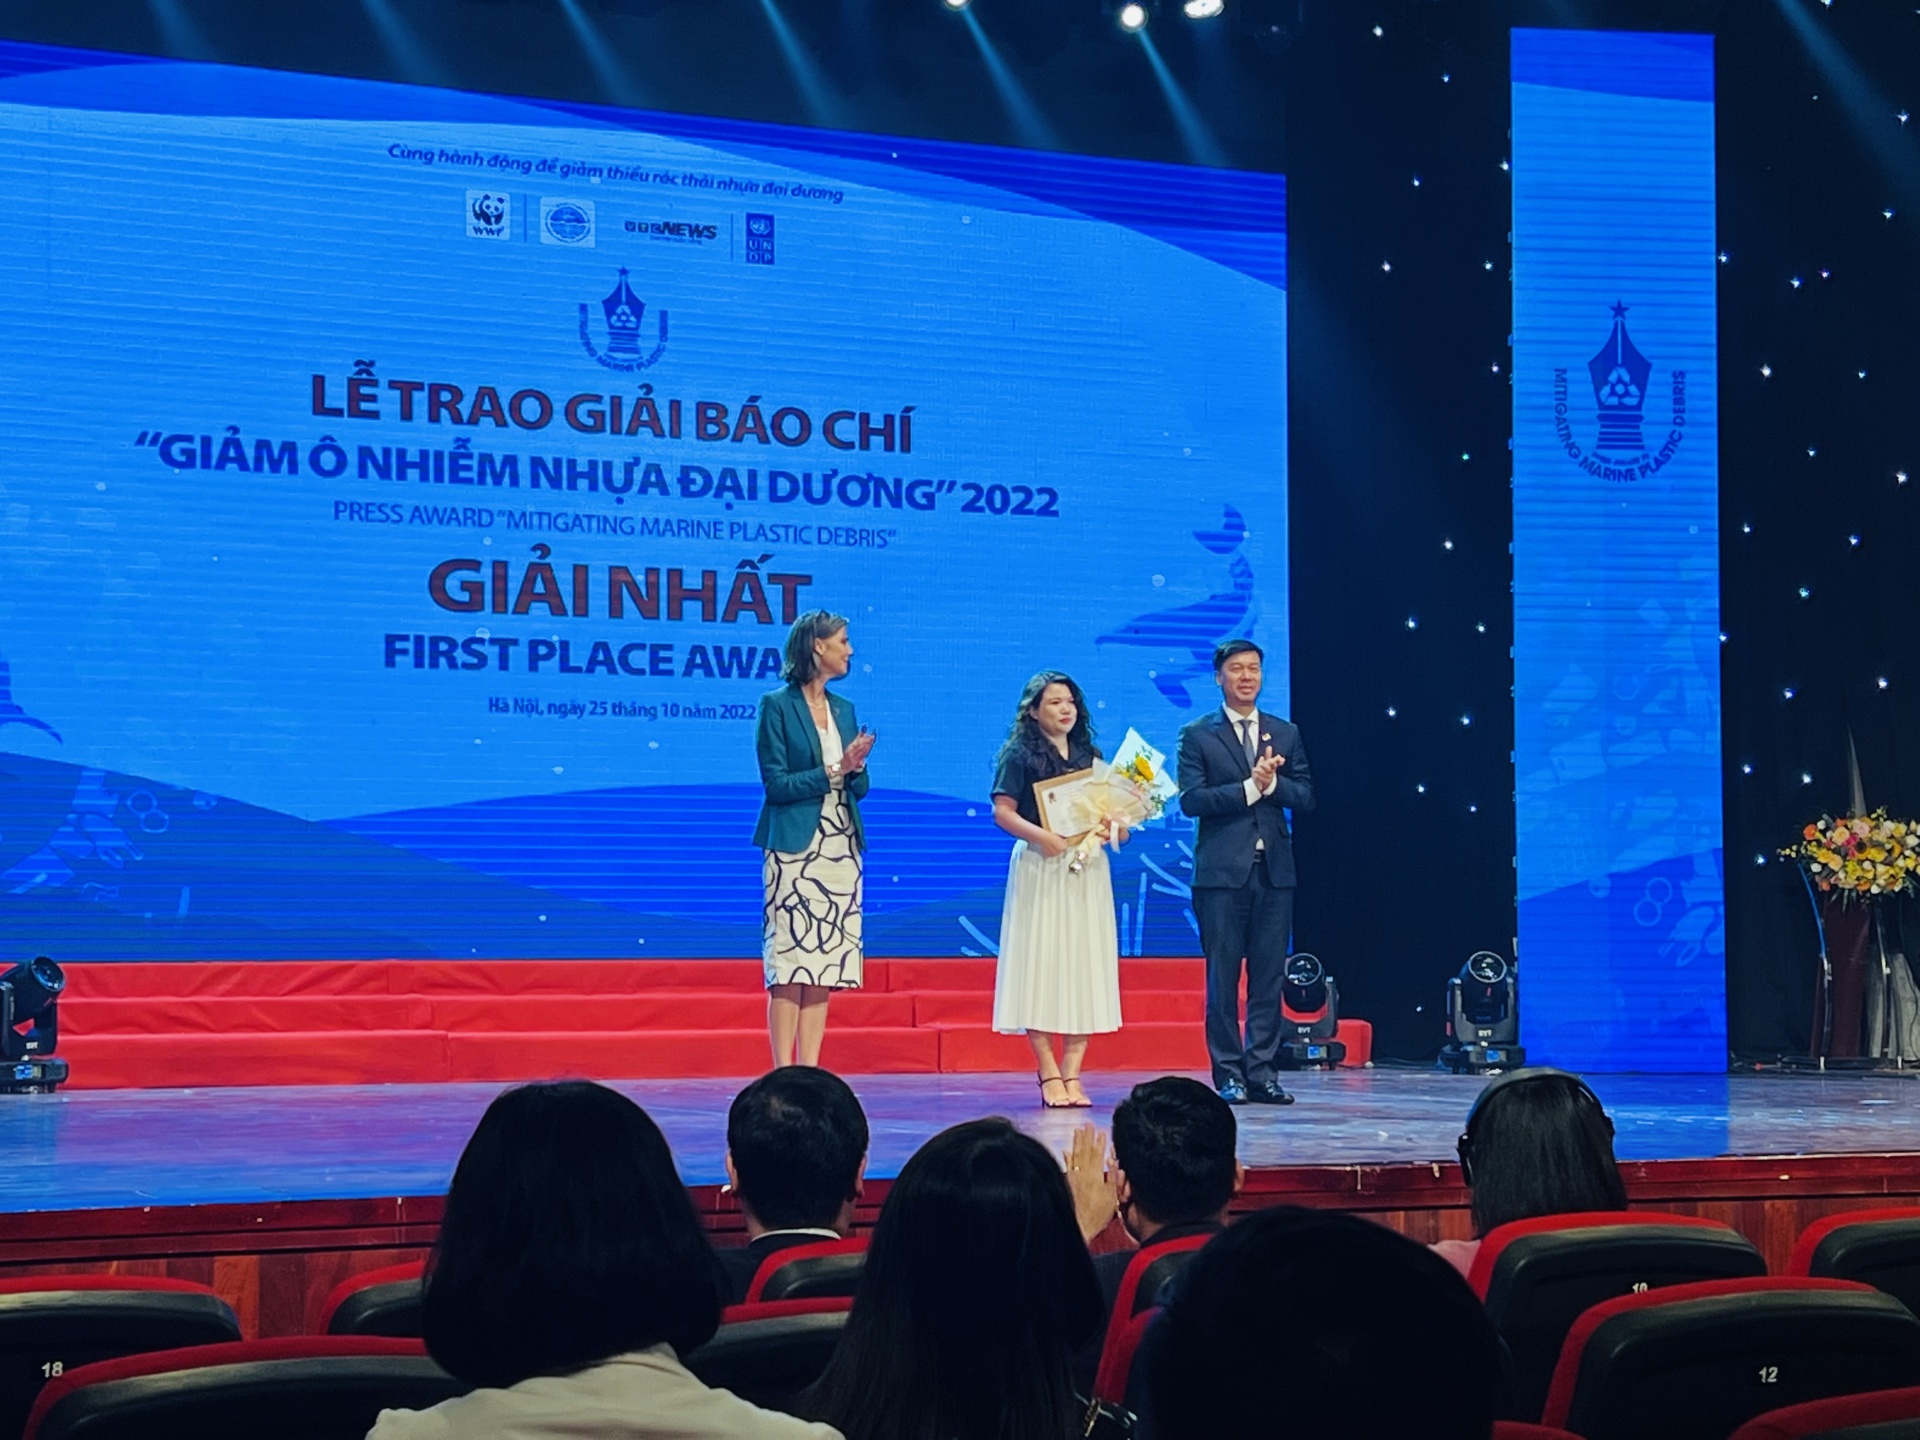 13 articles win the Mitigating Marine Plastic Debris 2022 journalism award